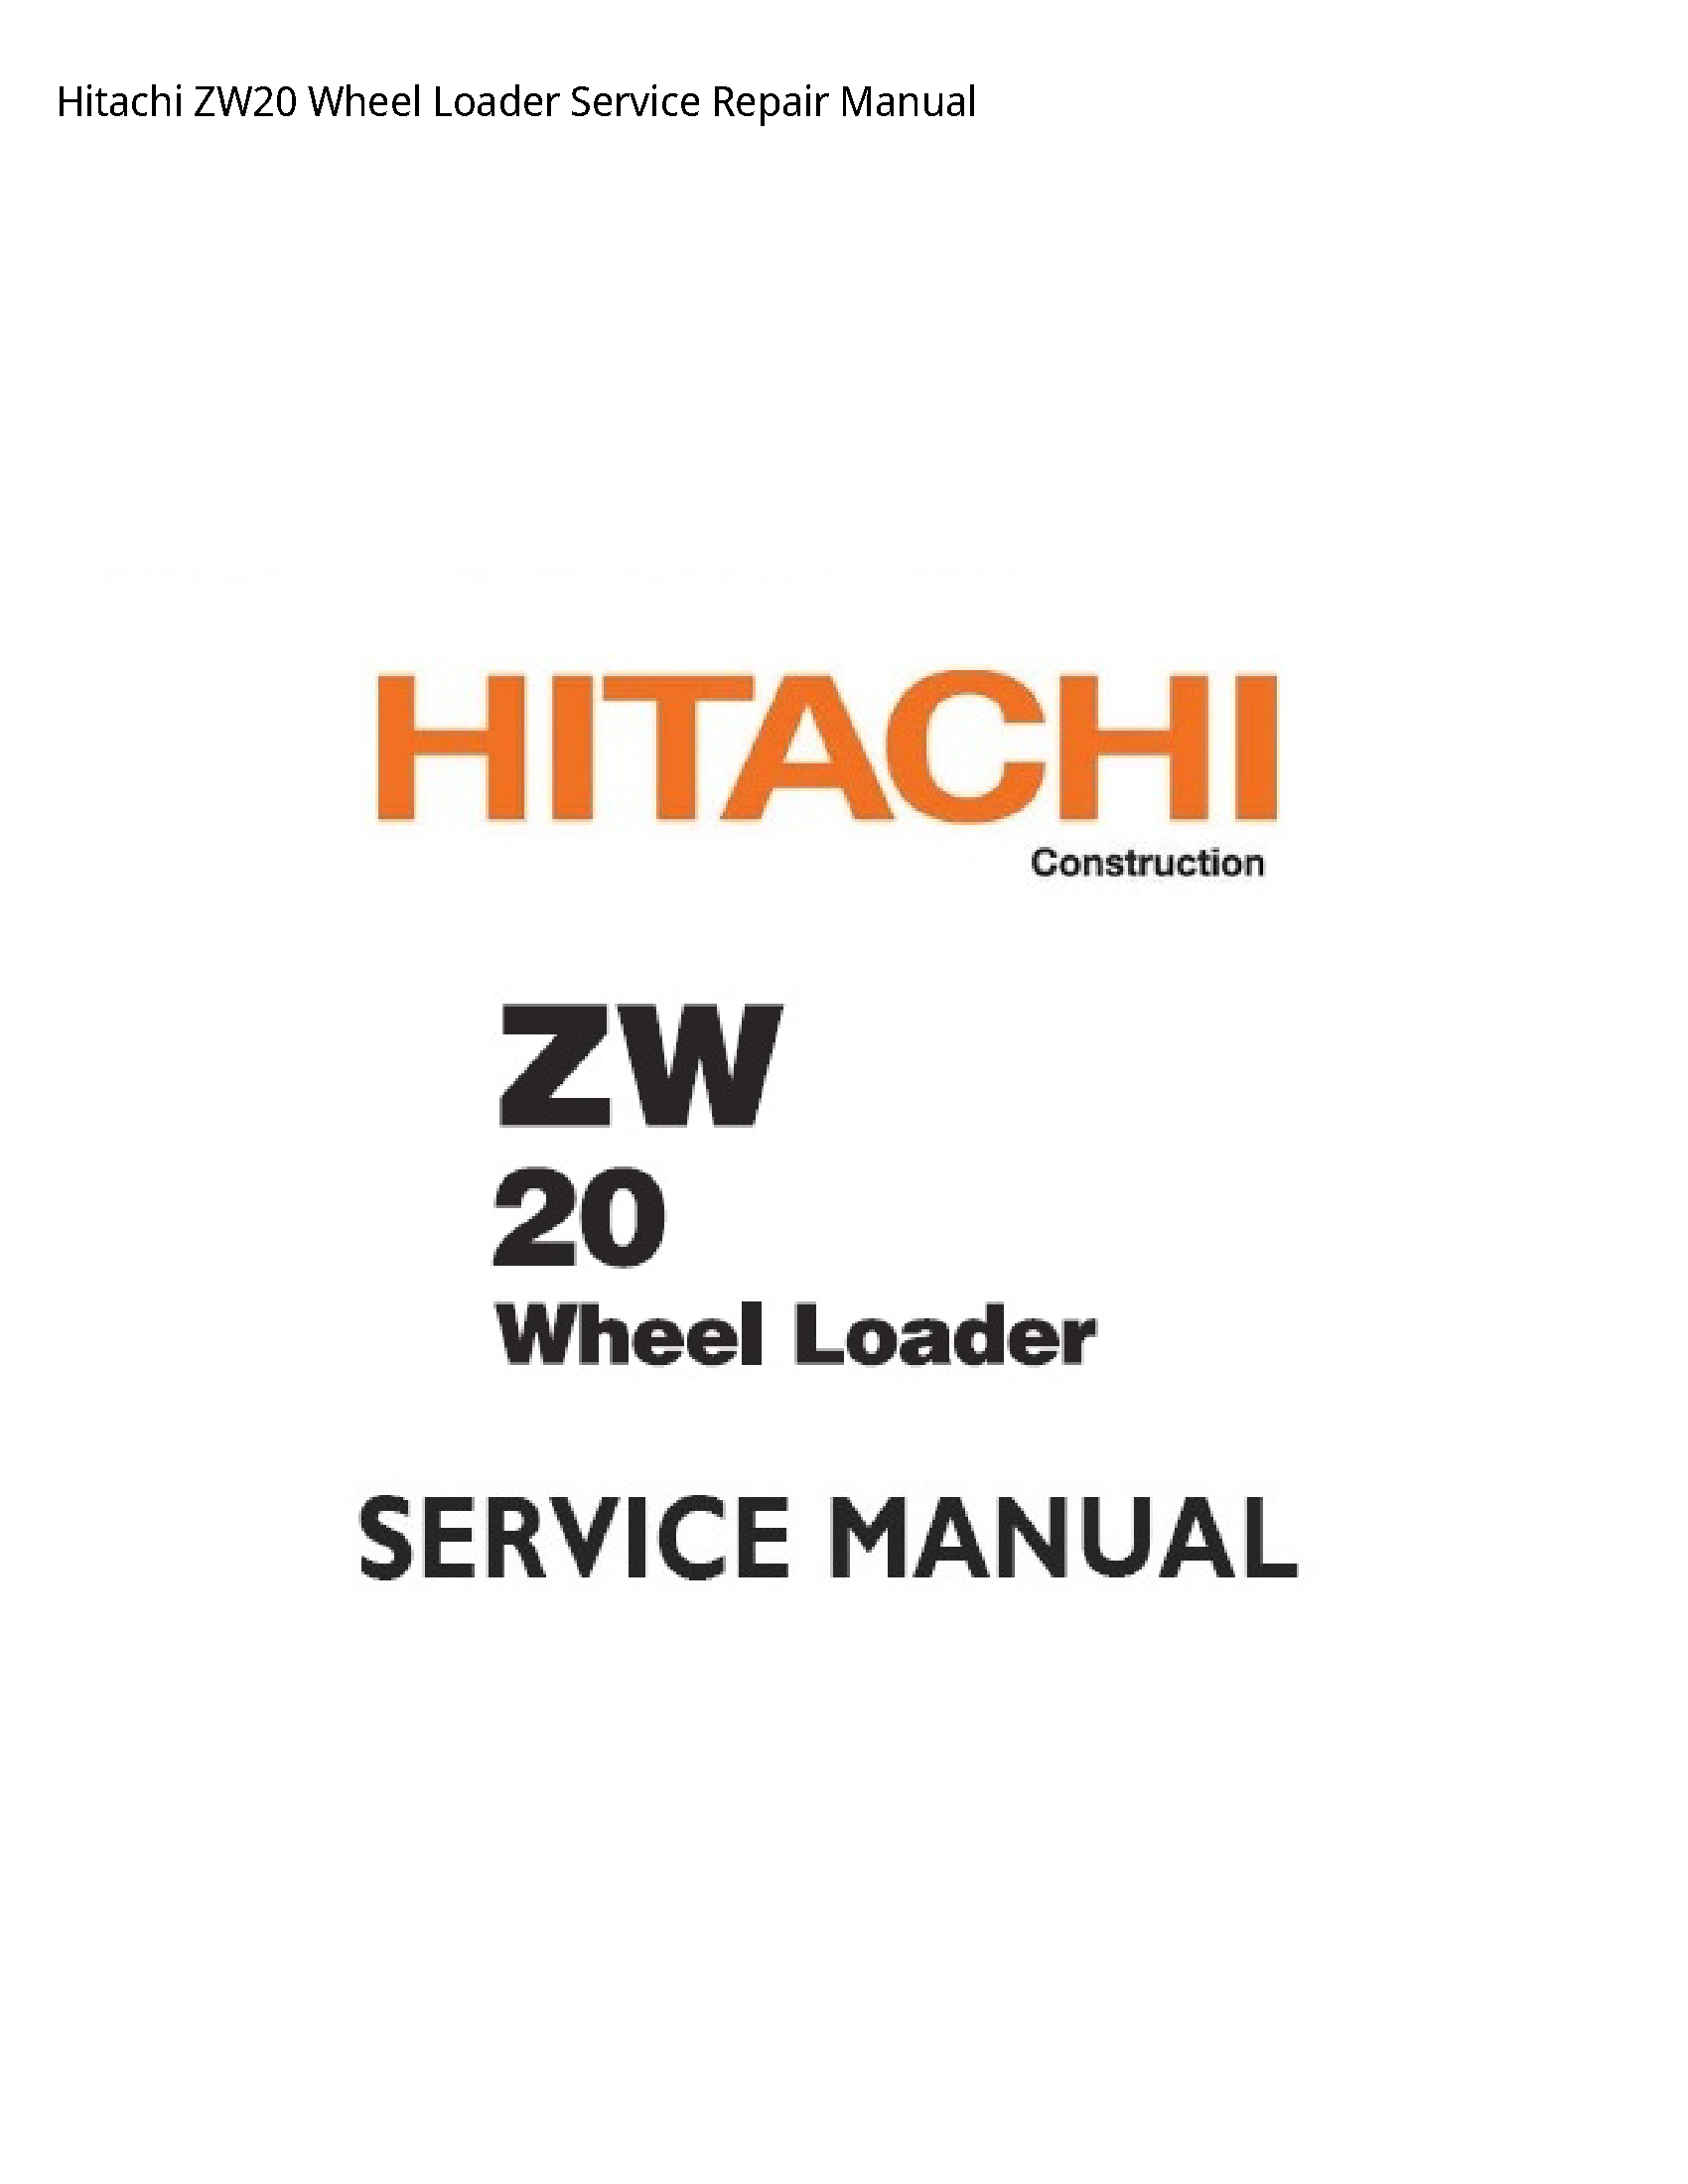 Hitachi ZW20 Wheel Loader manual